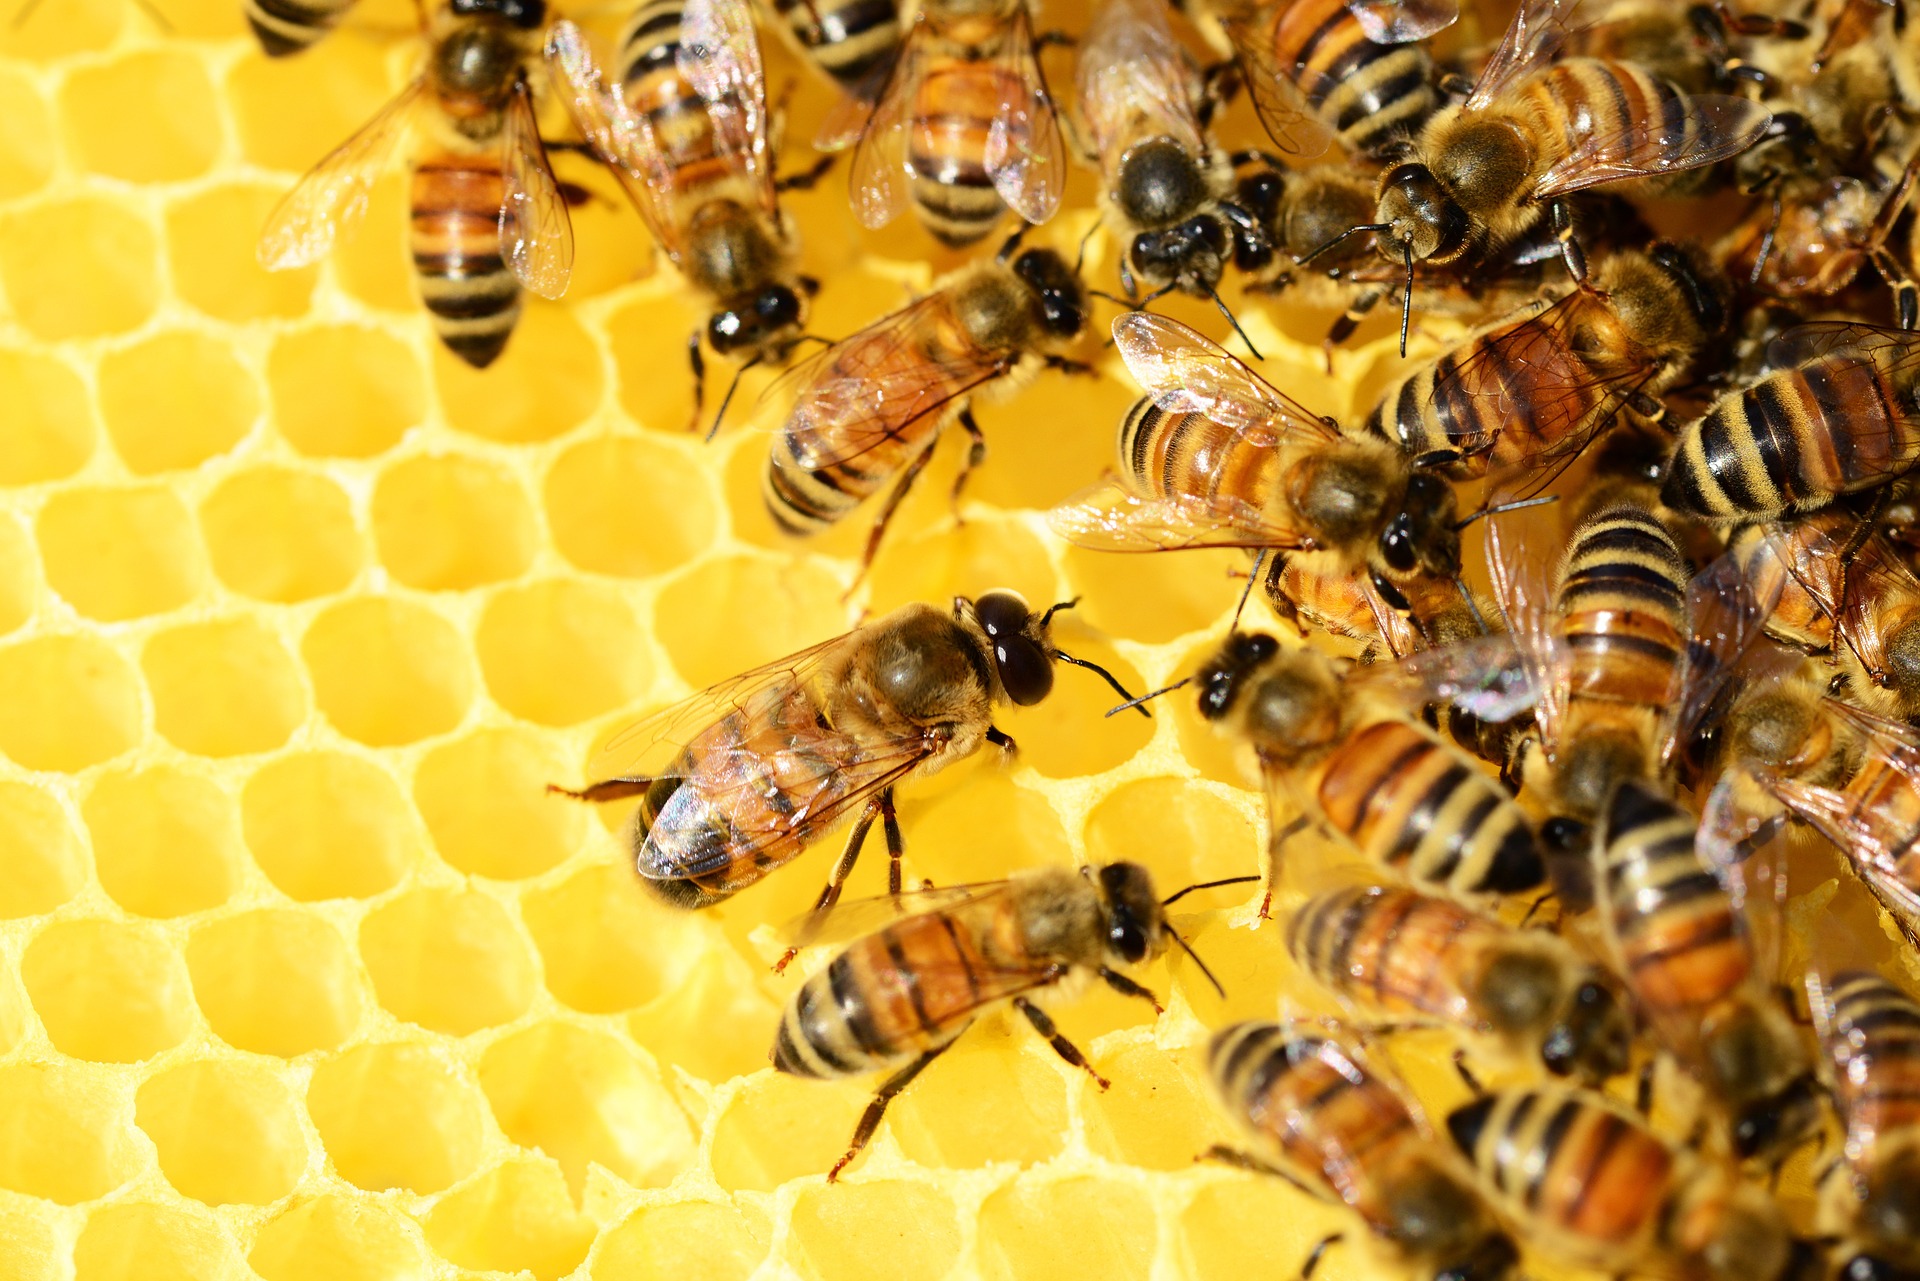 Mesilased kärjel